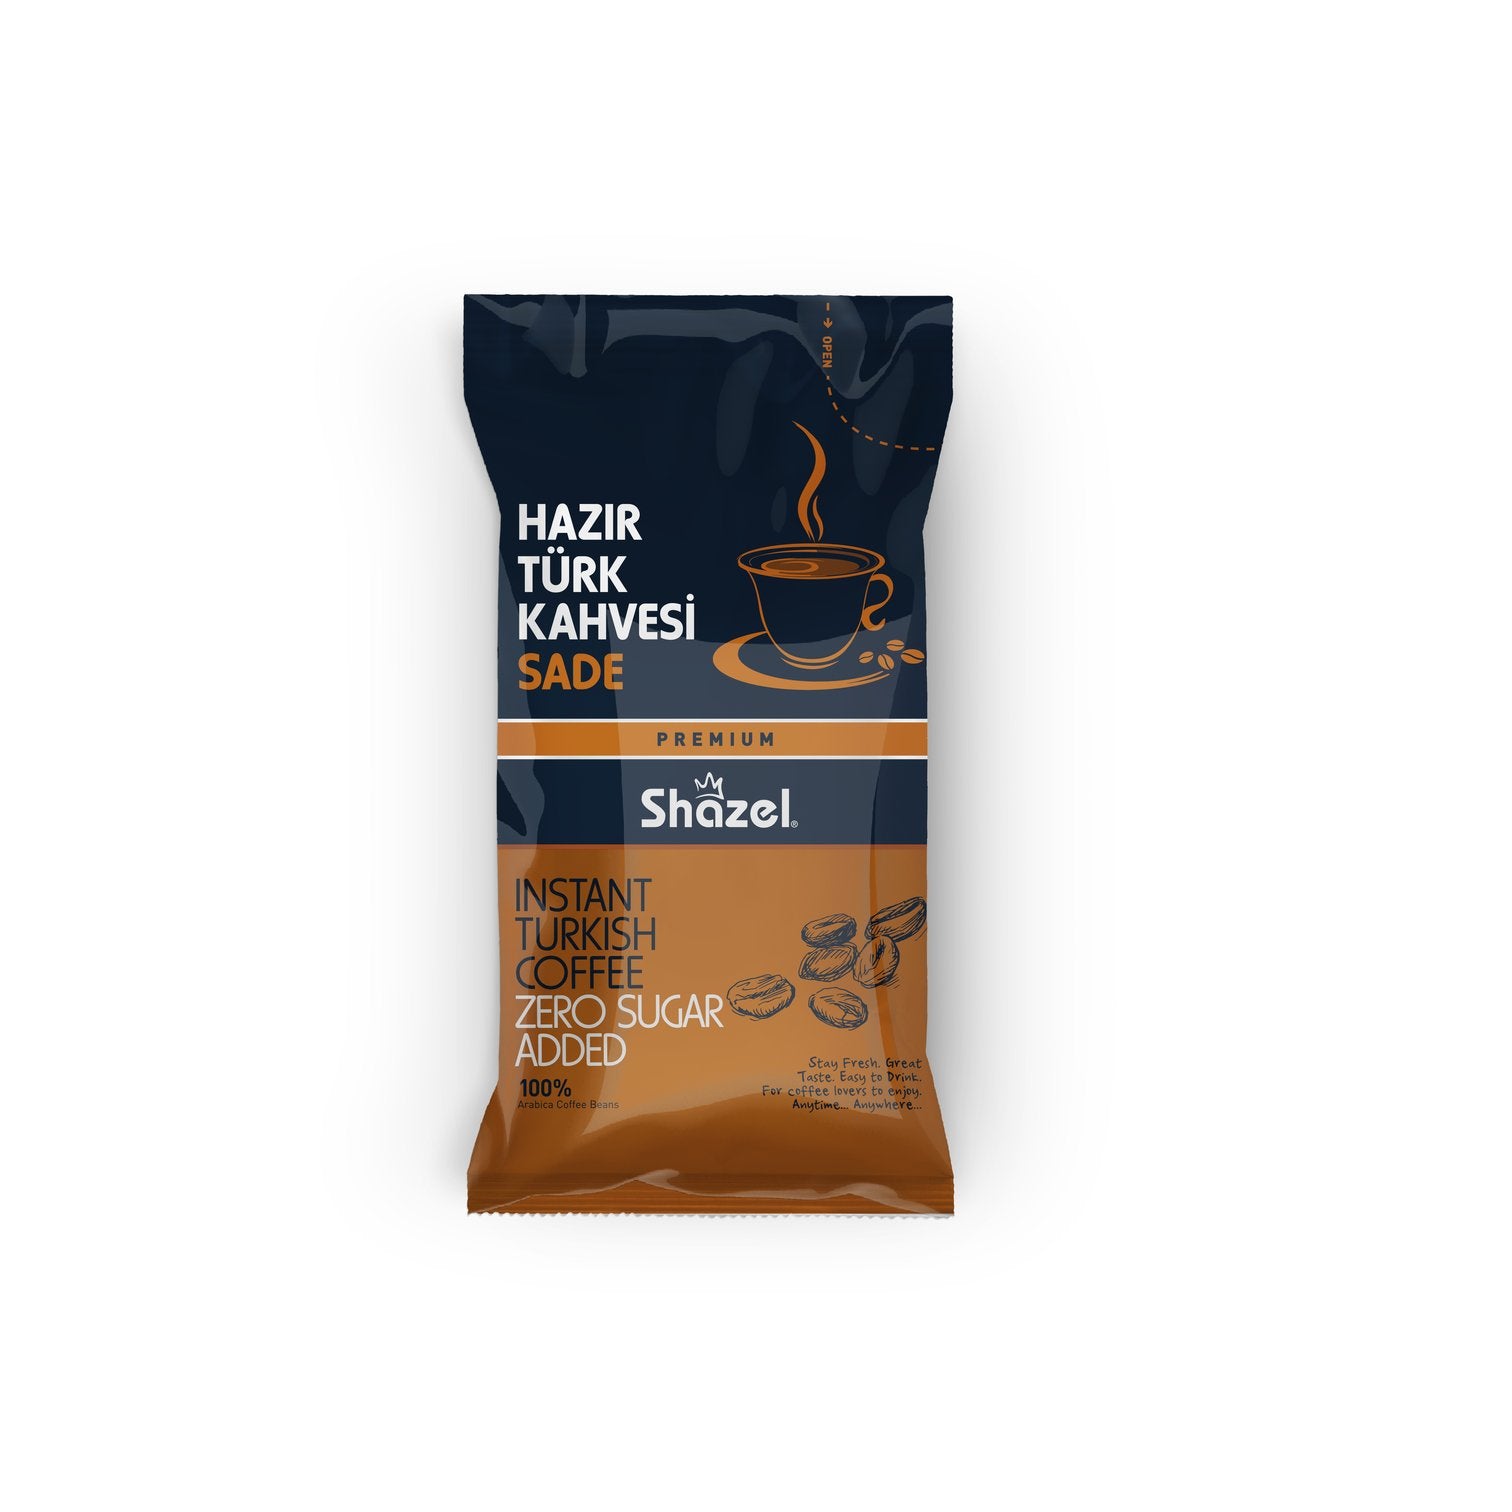 Shazel Instant Turkish Coffee Plain 7G Single Drink